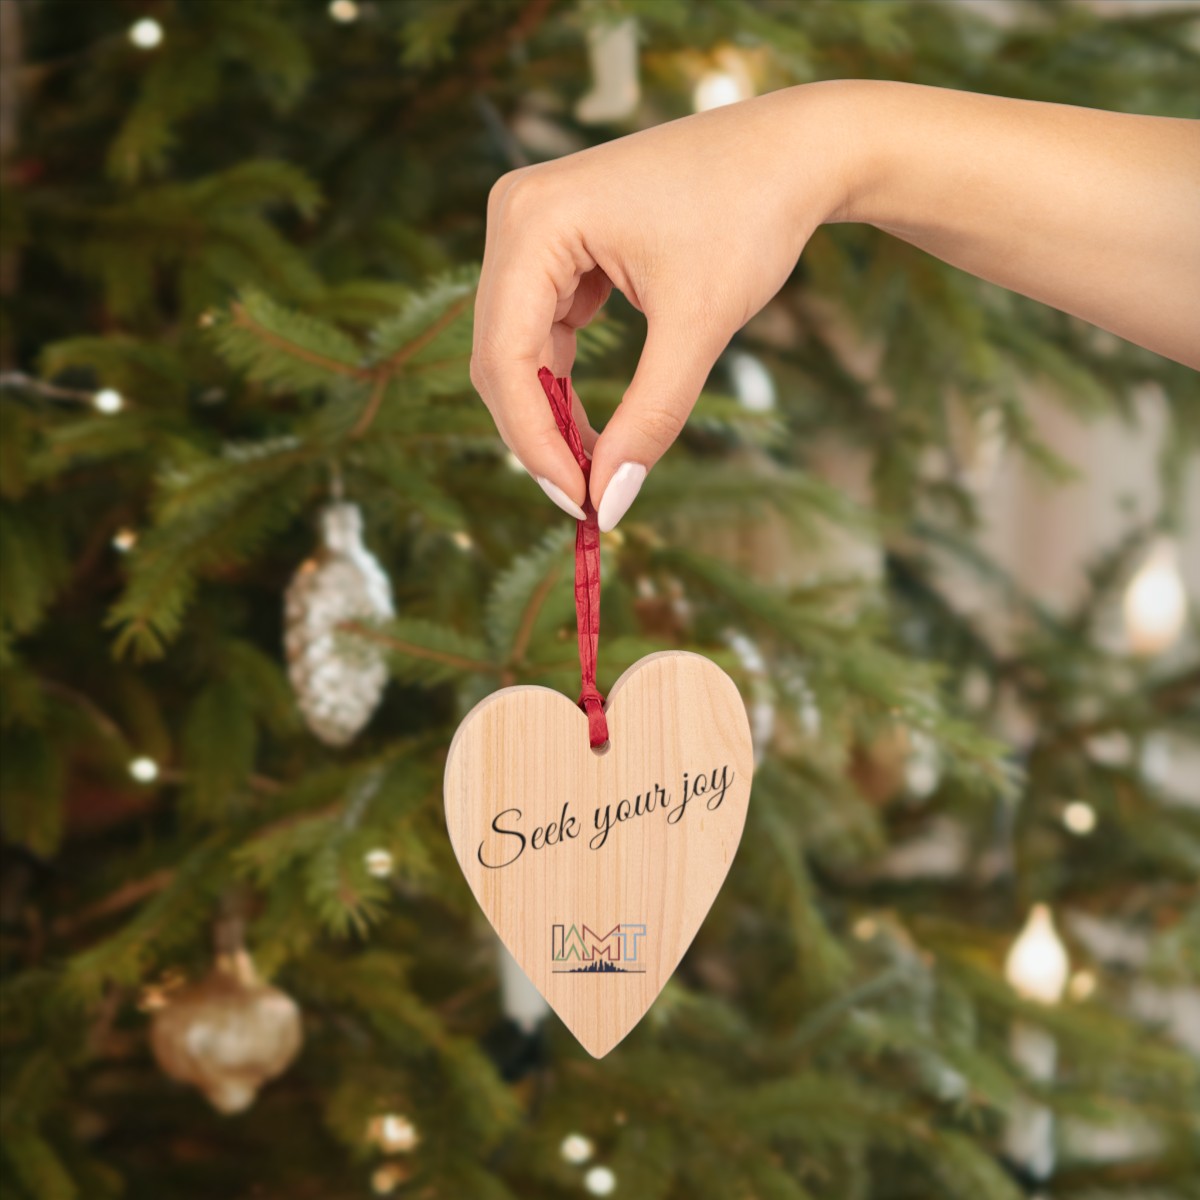 Seek your Joy Wooden Ornament/Magnet product thumbnail image